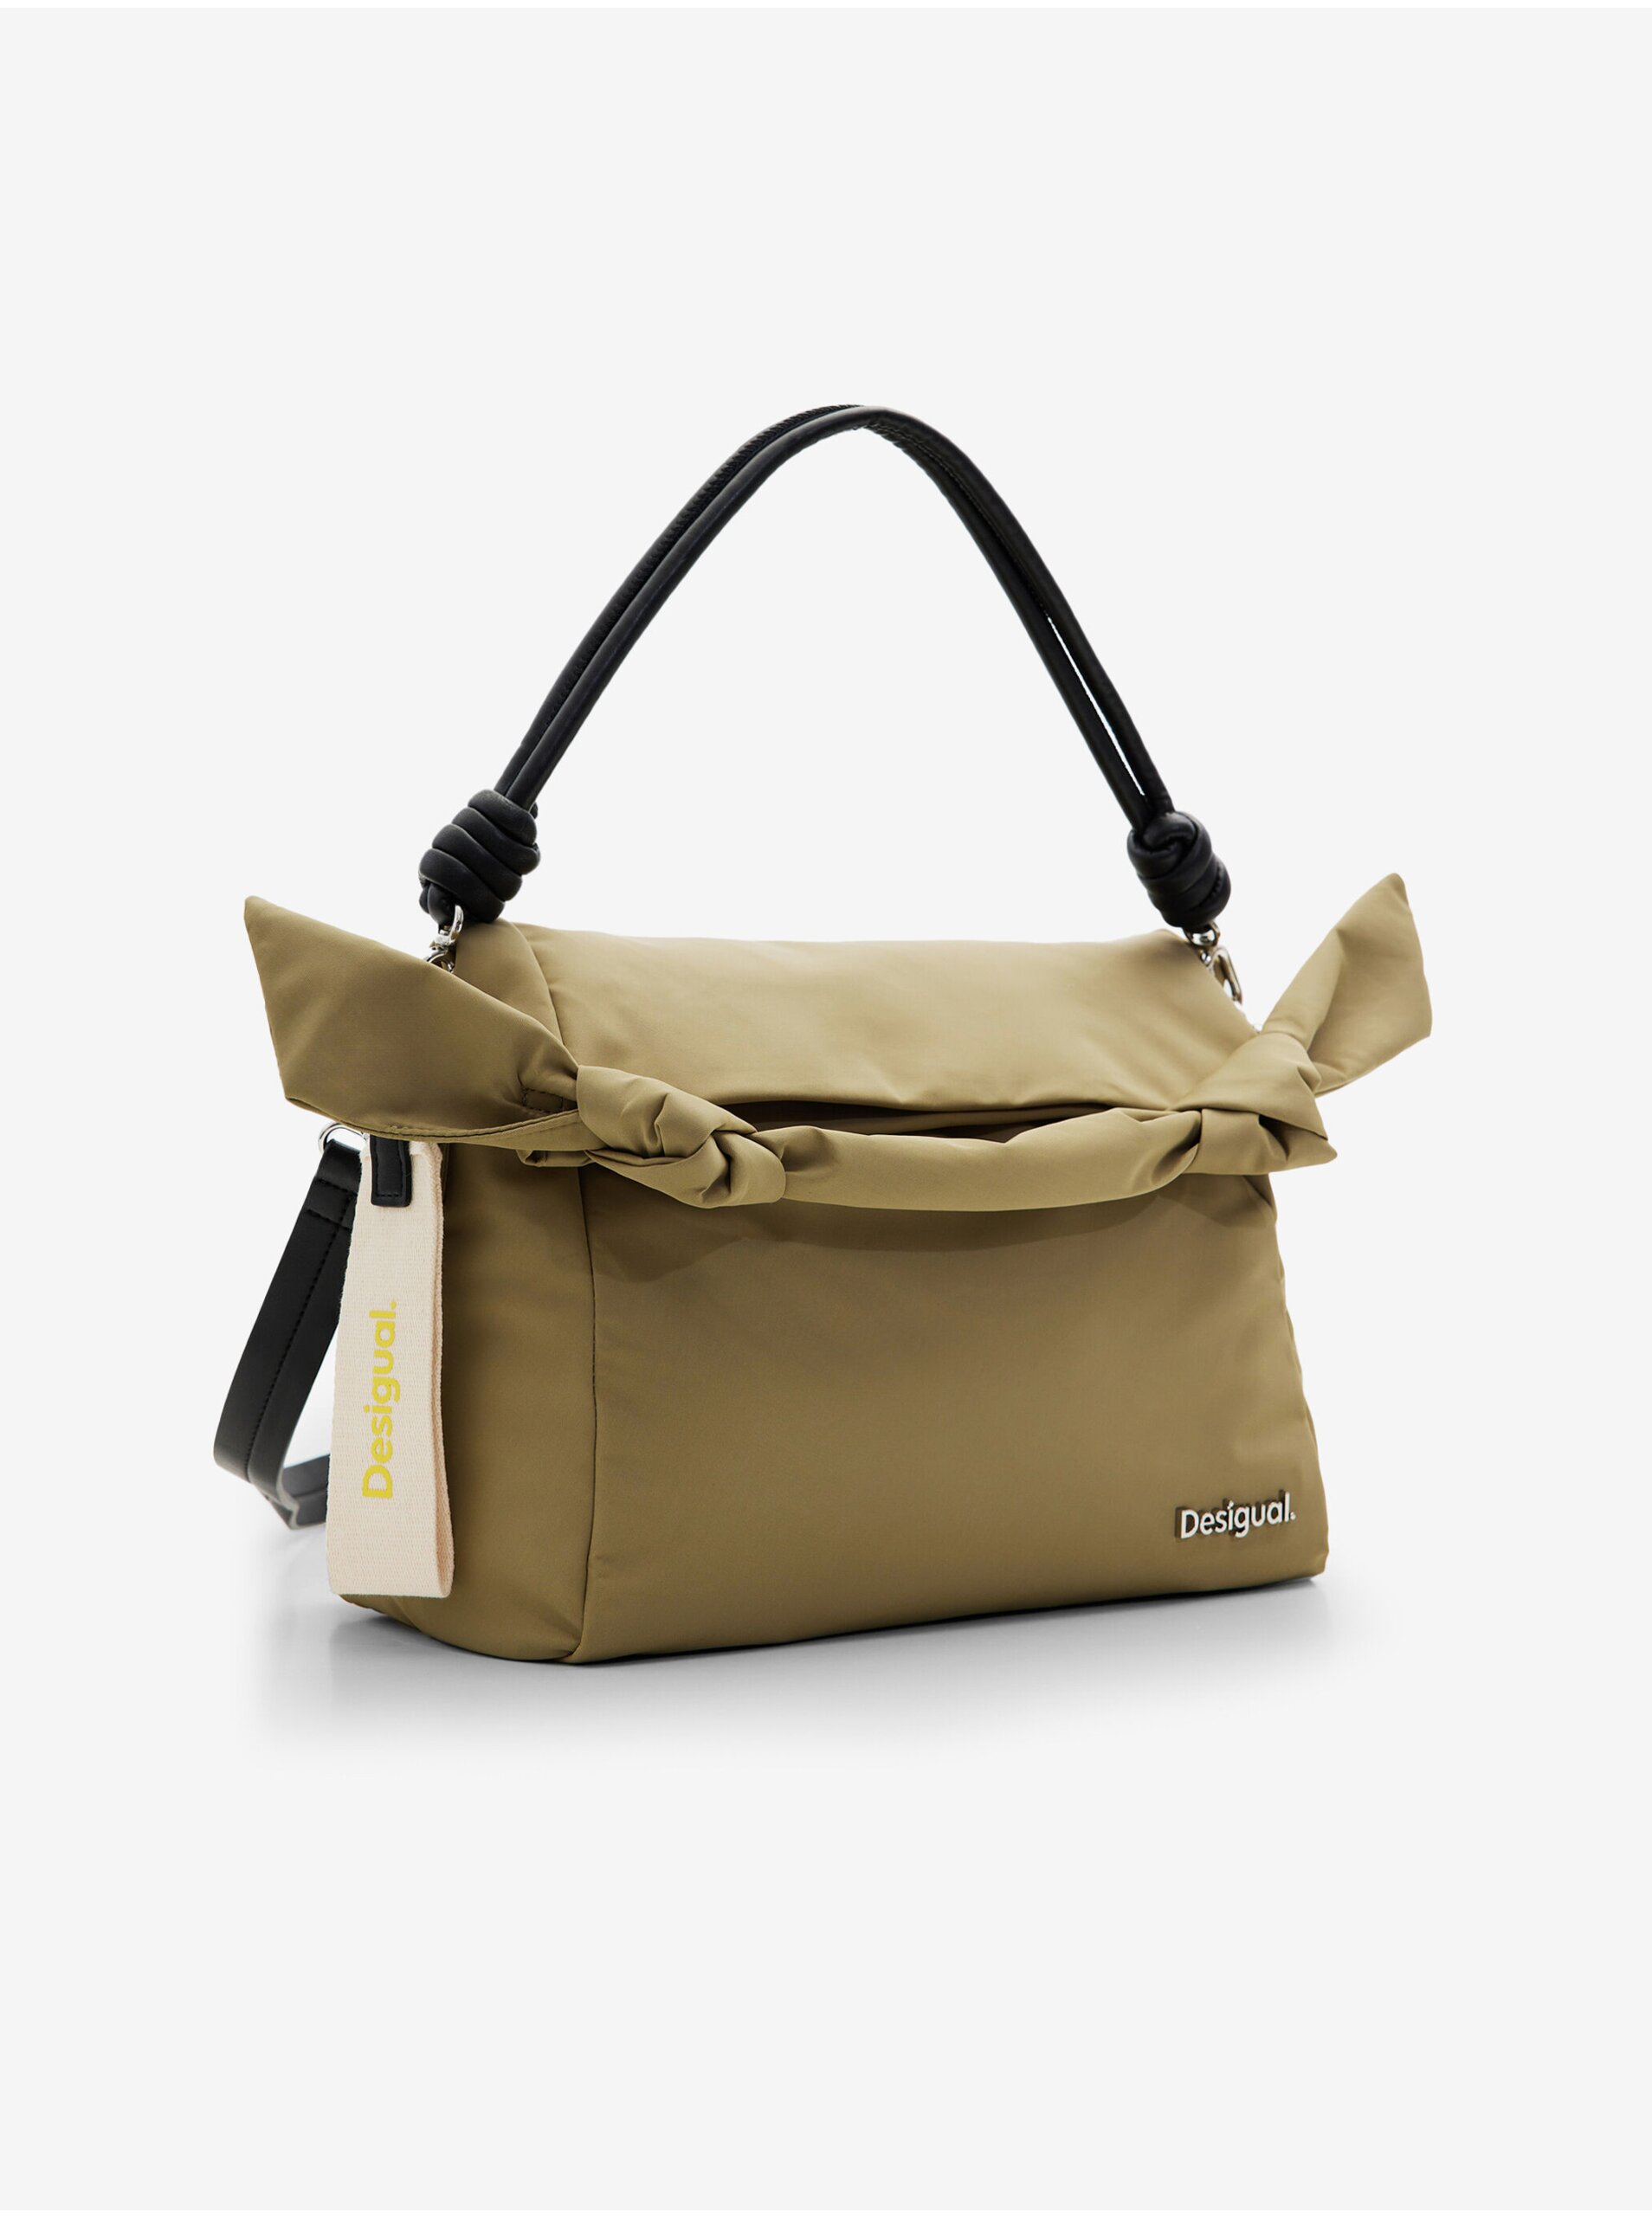 Khaki women's handbag Desigual Priori Loverty 3.0 - Women's